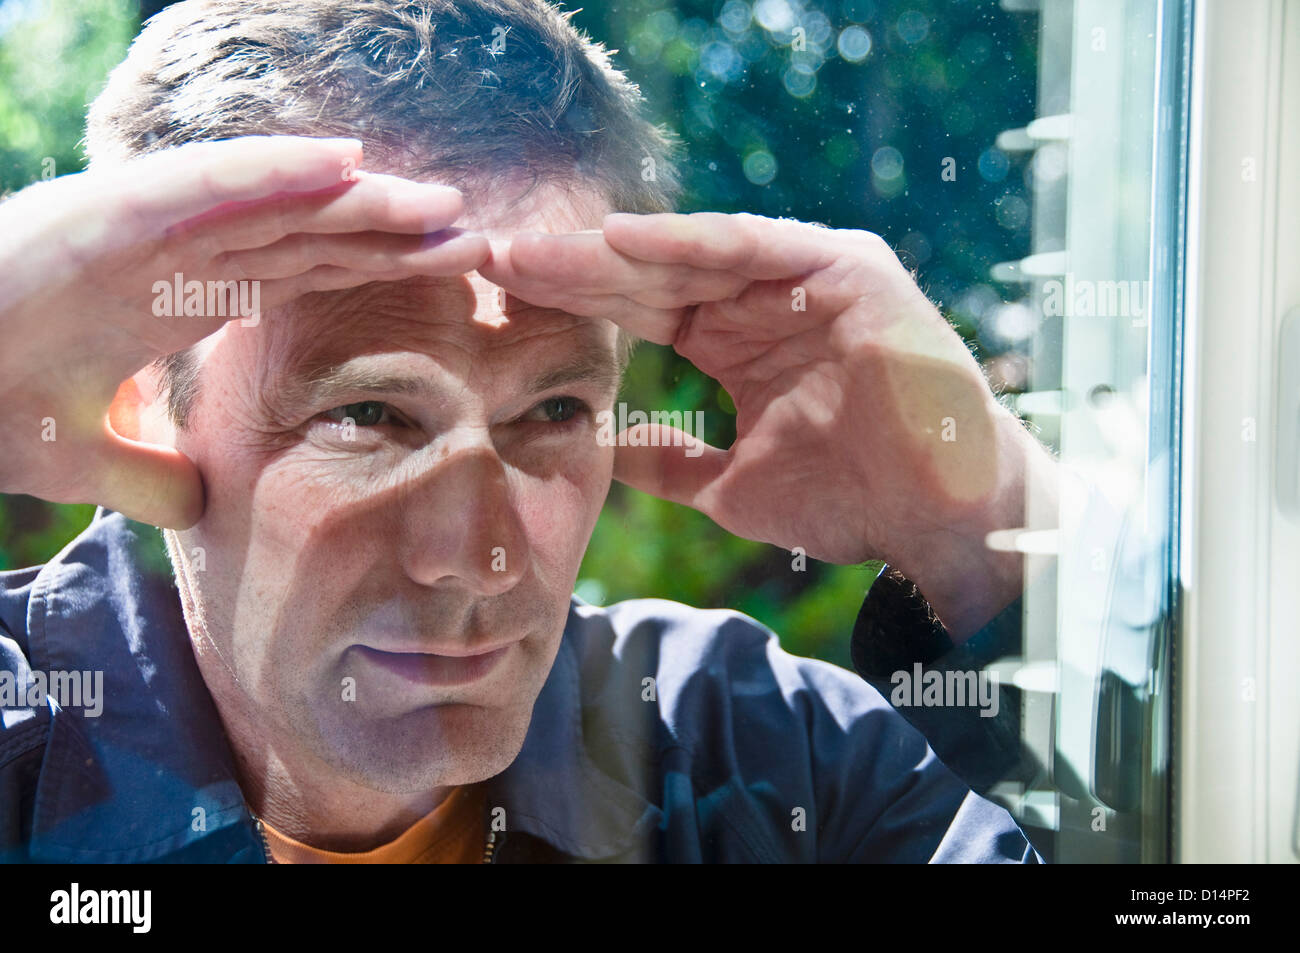 Man peering in window of house Stock Photo